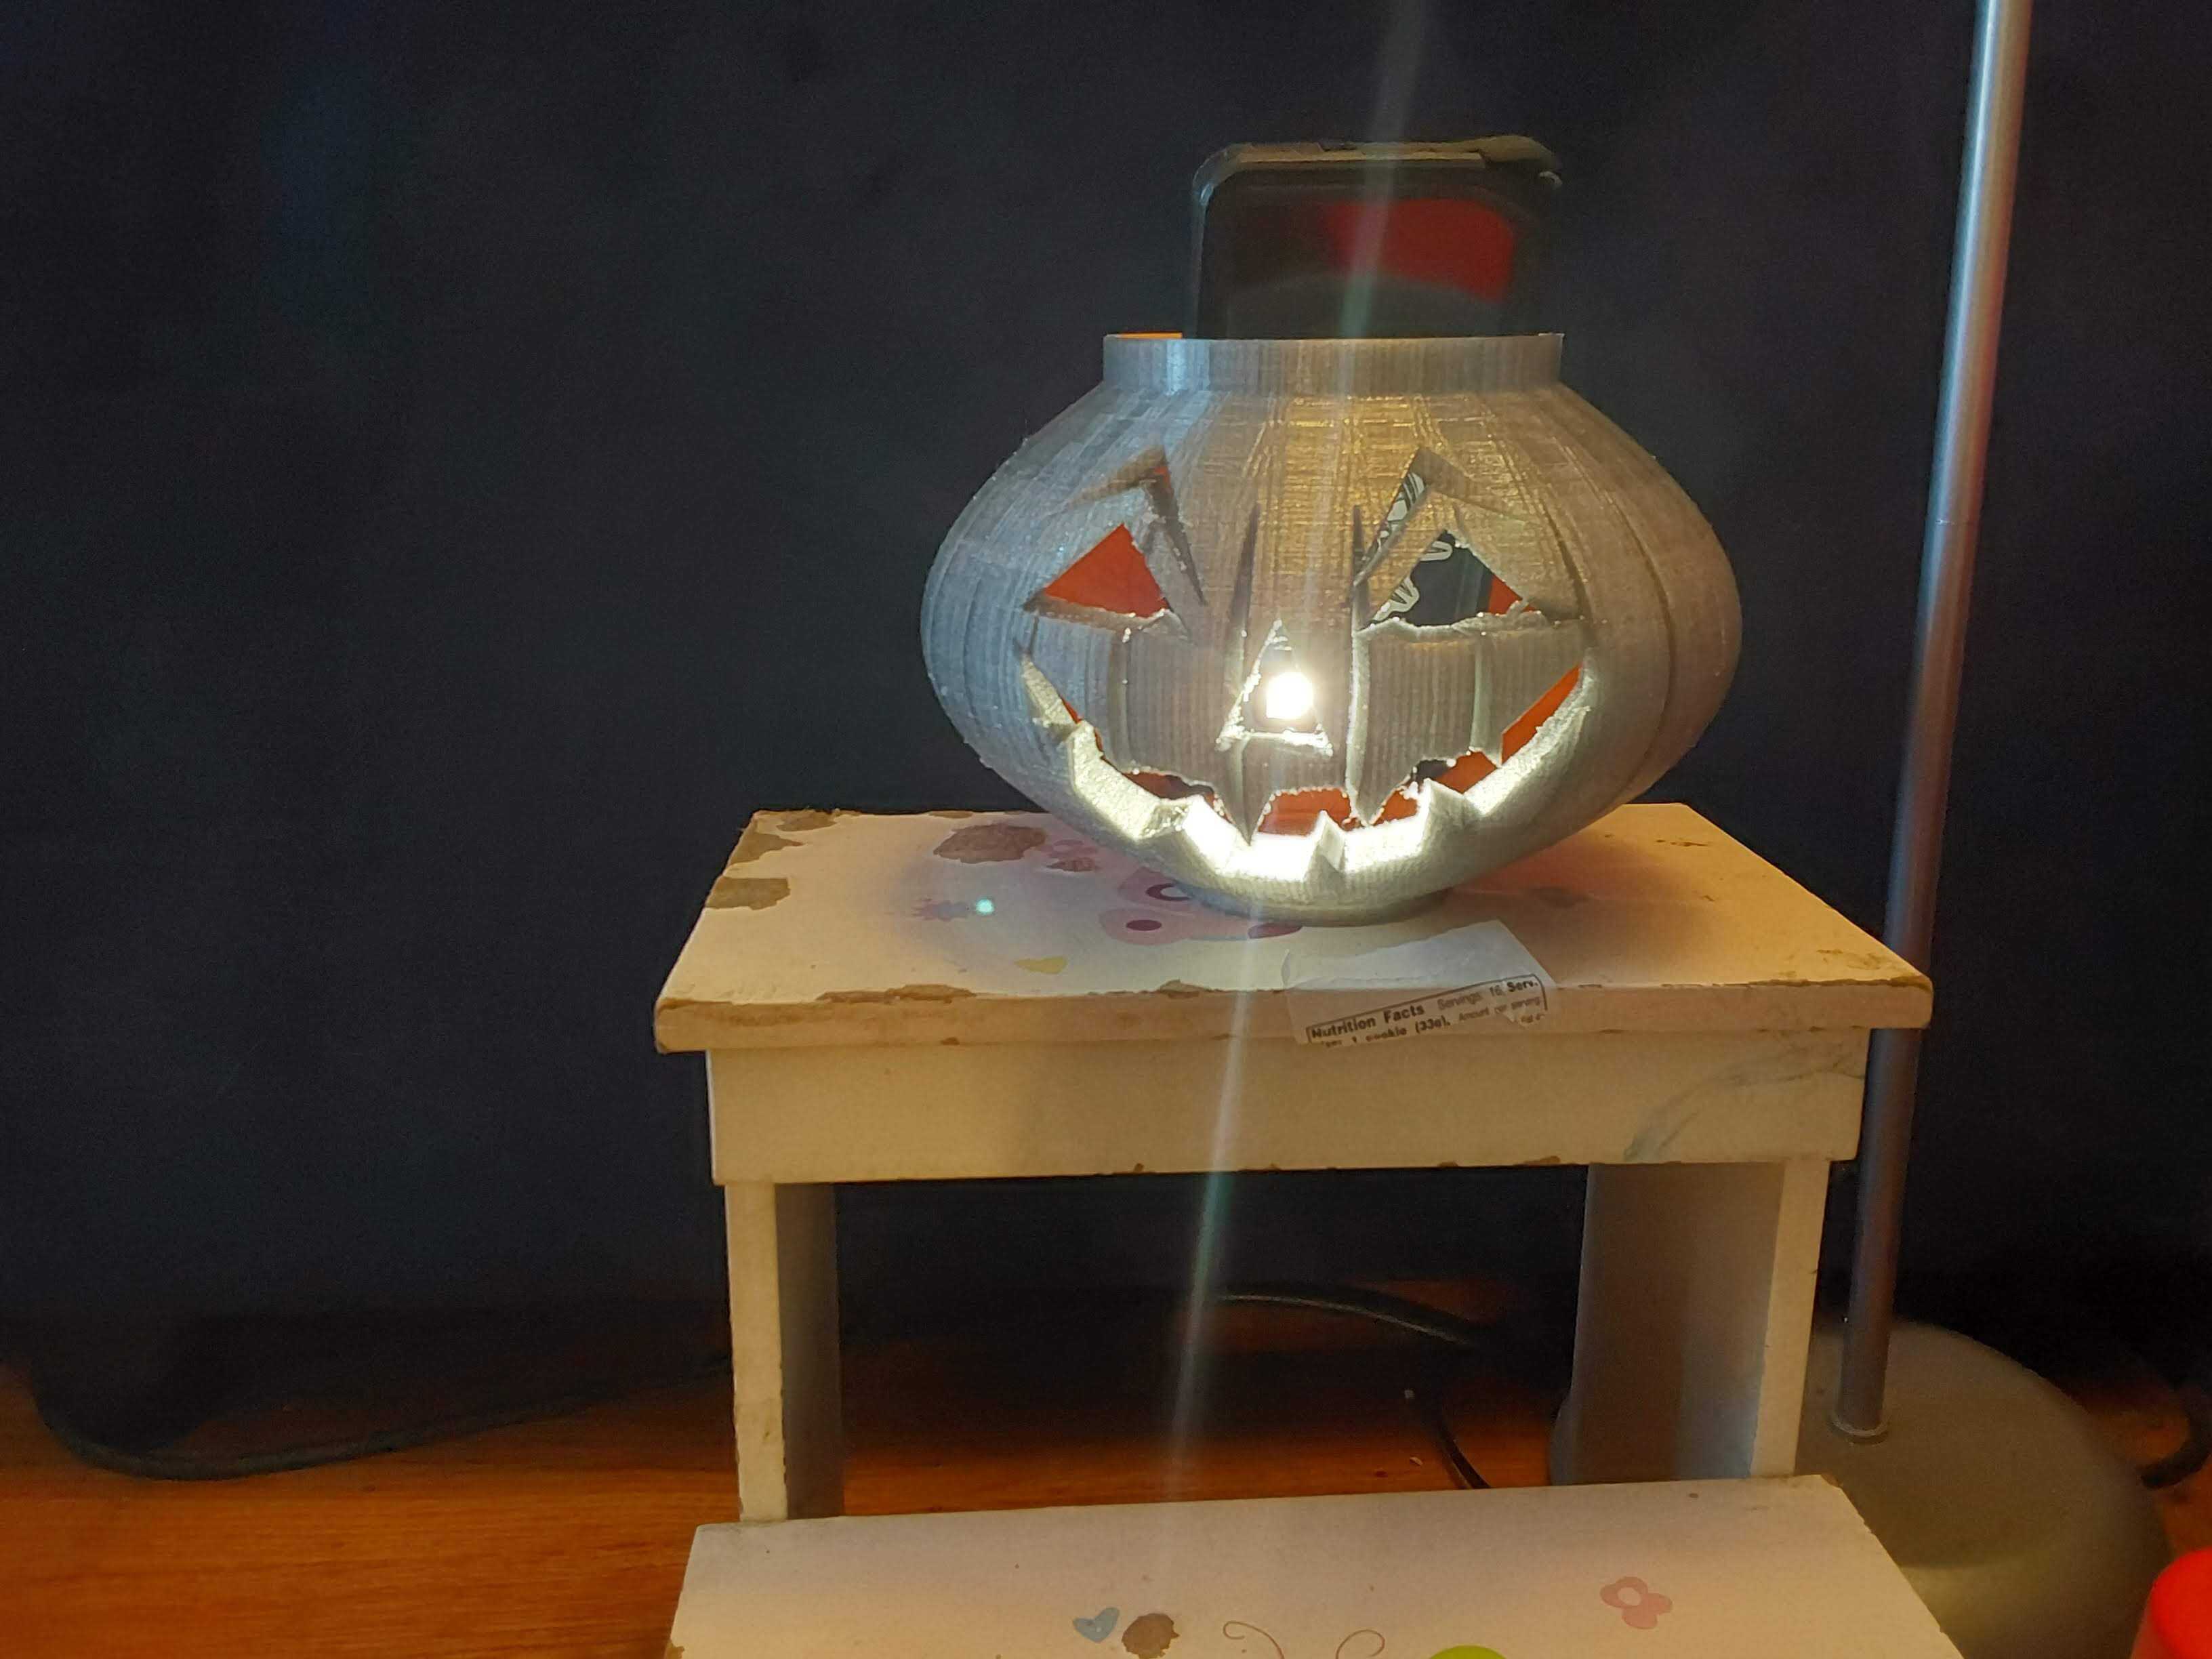 Pumpkin Lamp